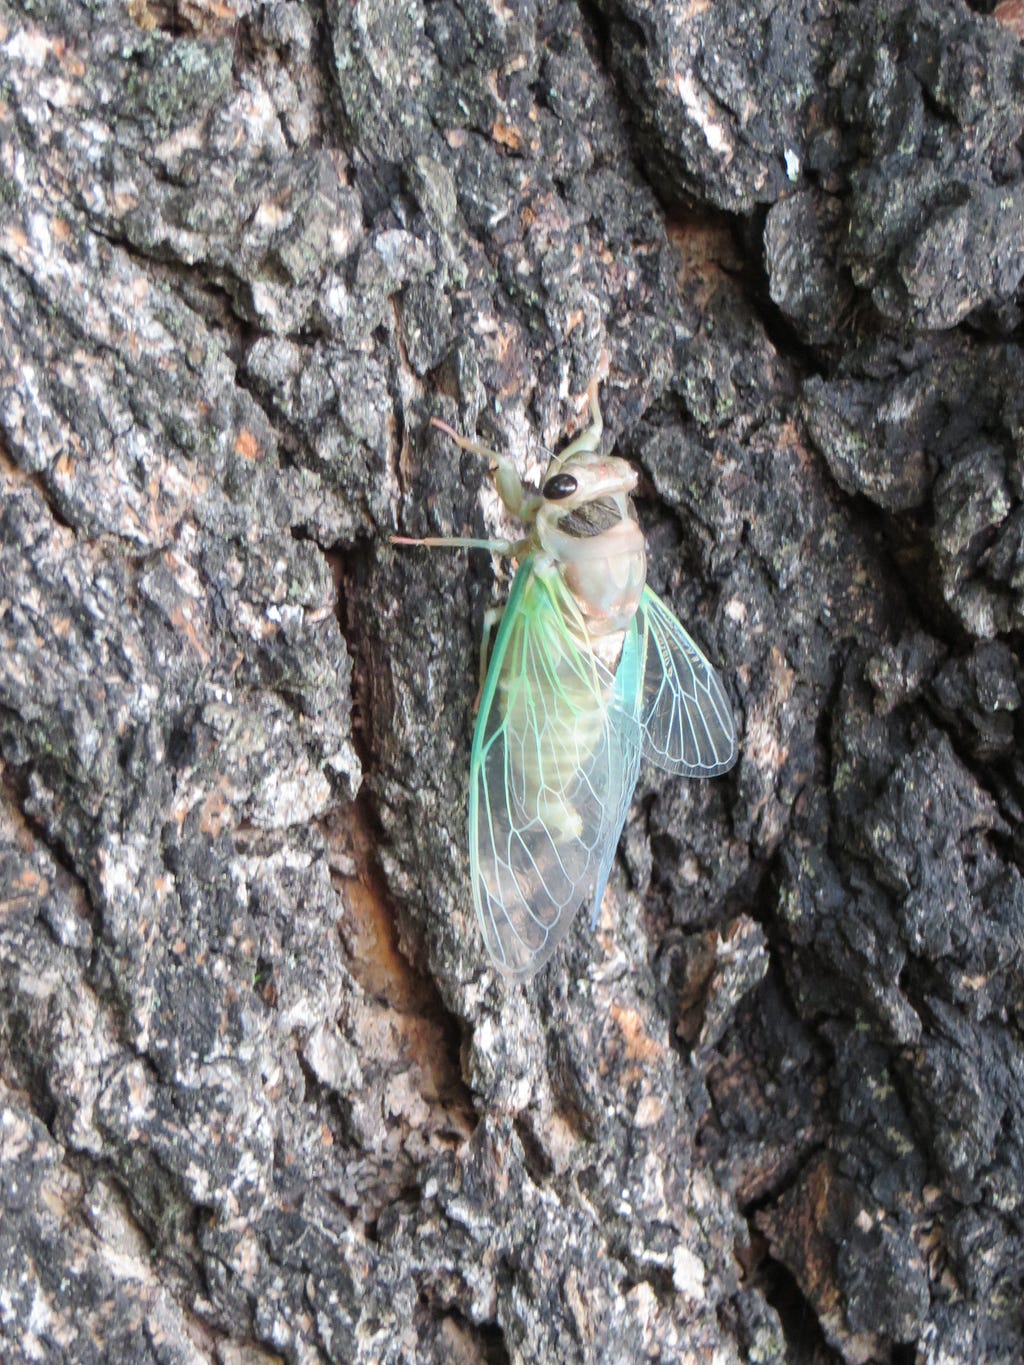 A just-hatched annual cicada, Neotibicen linnei.